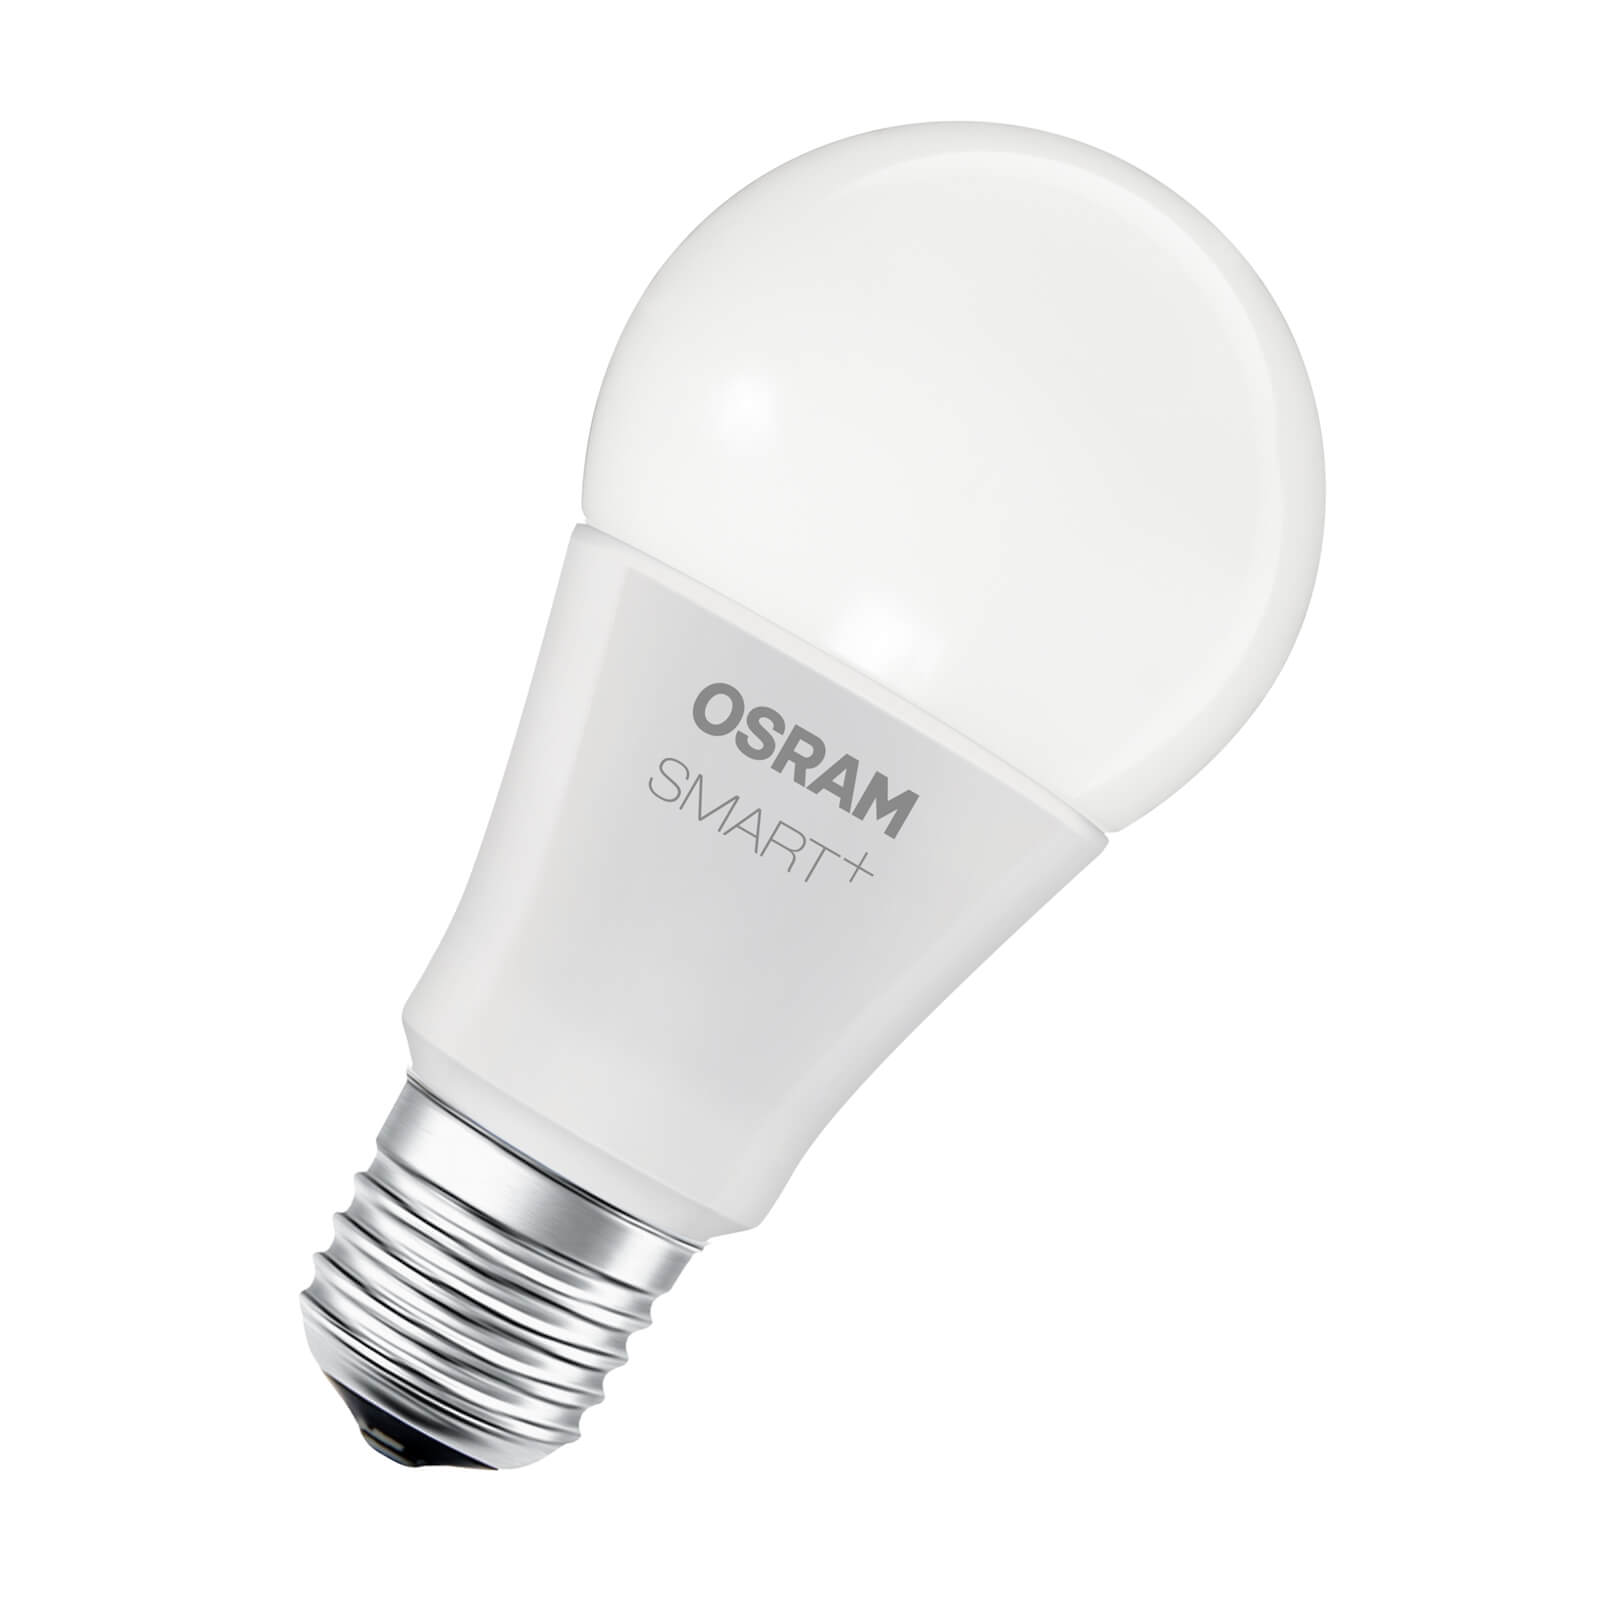 Osram Smart+ CLA60 Bluetooth ES RgBW Light Bulb